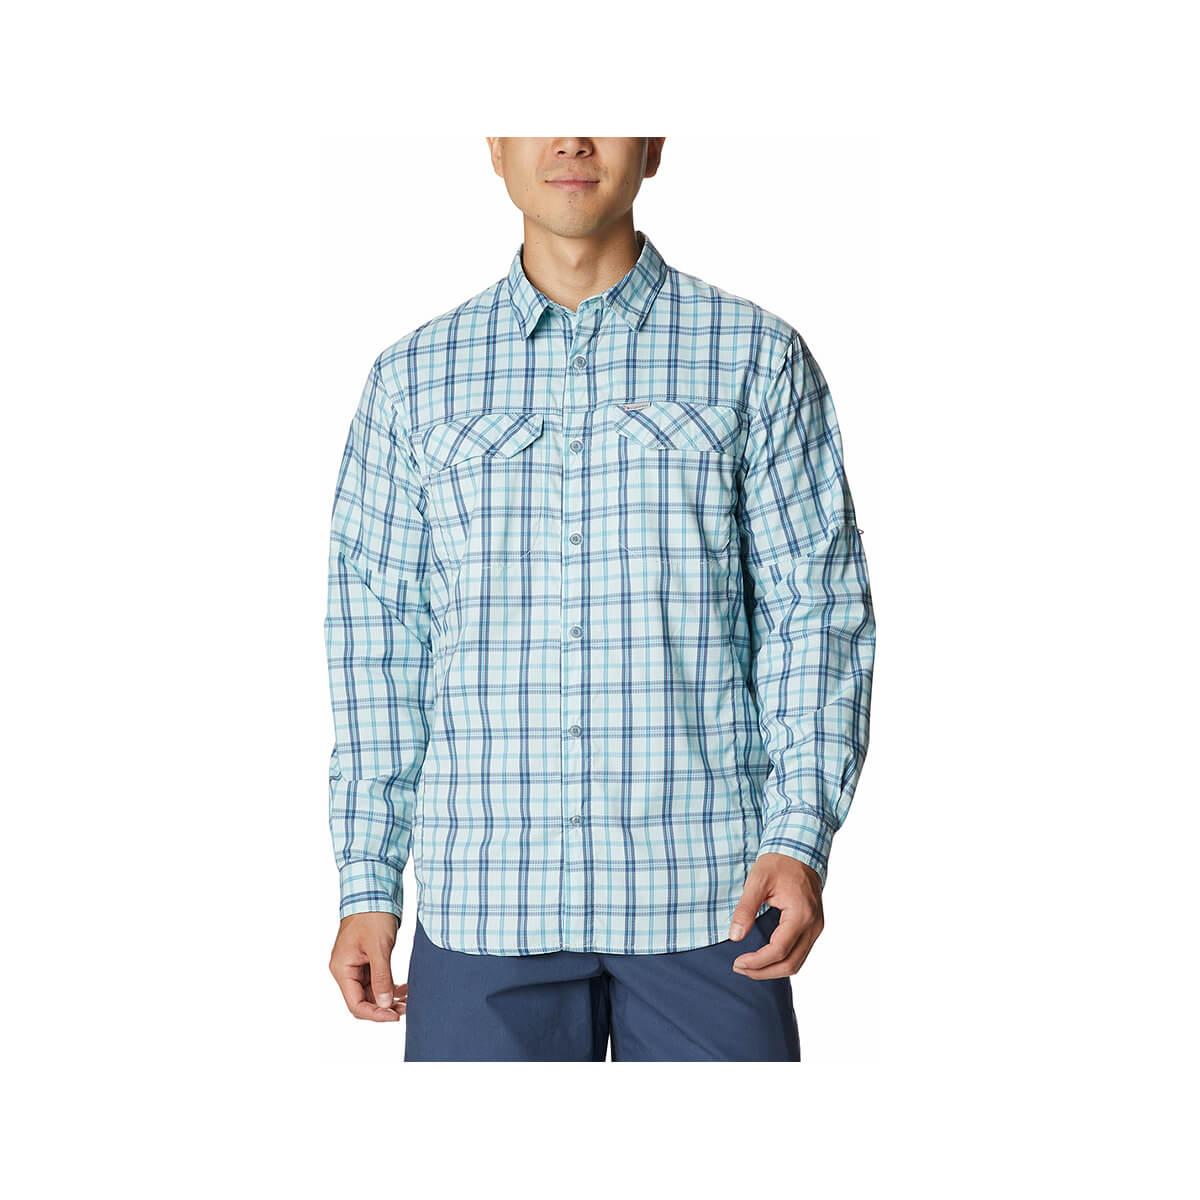  Men's Silver Ridge Lite Plaid Long Sleeve Button Up Shirt